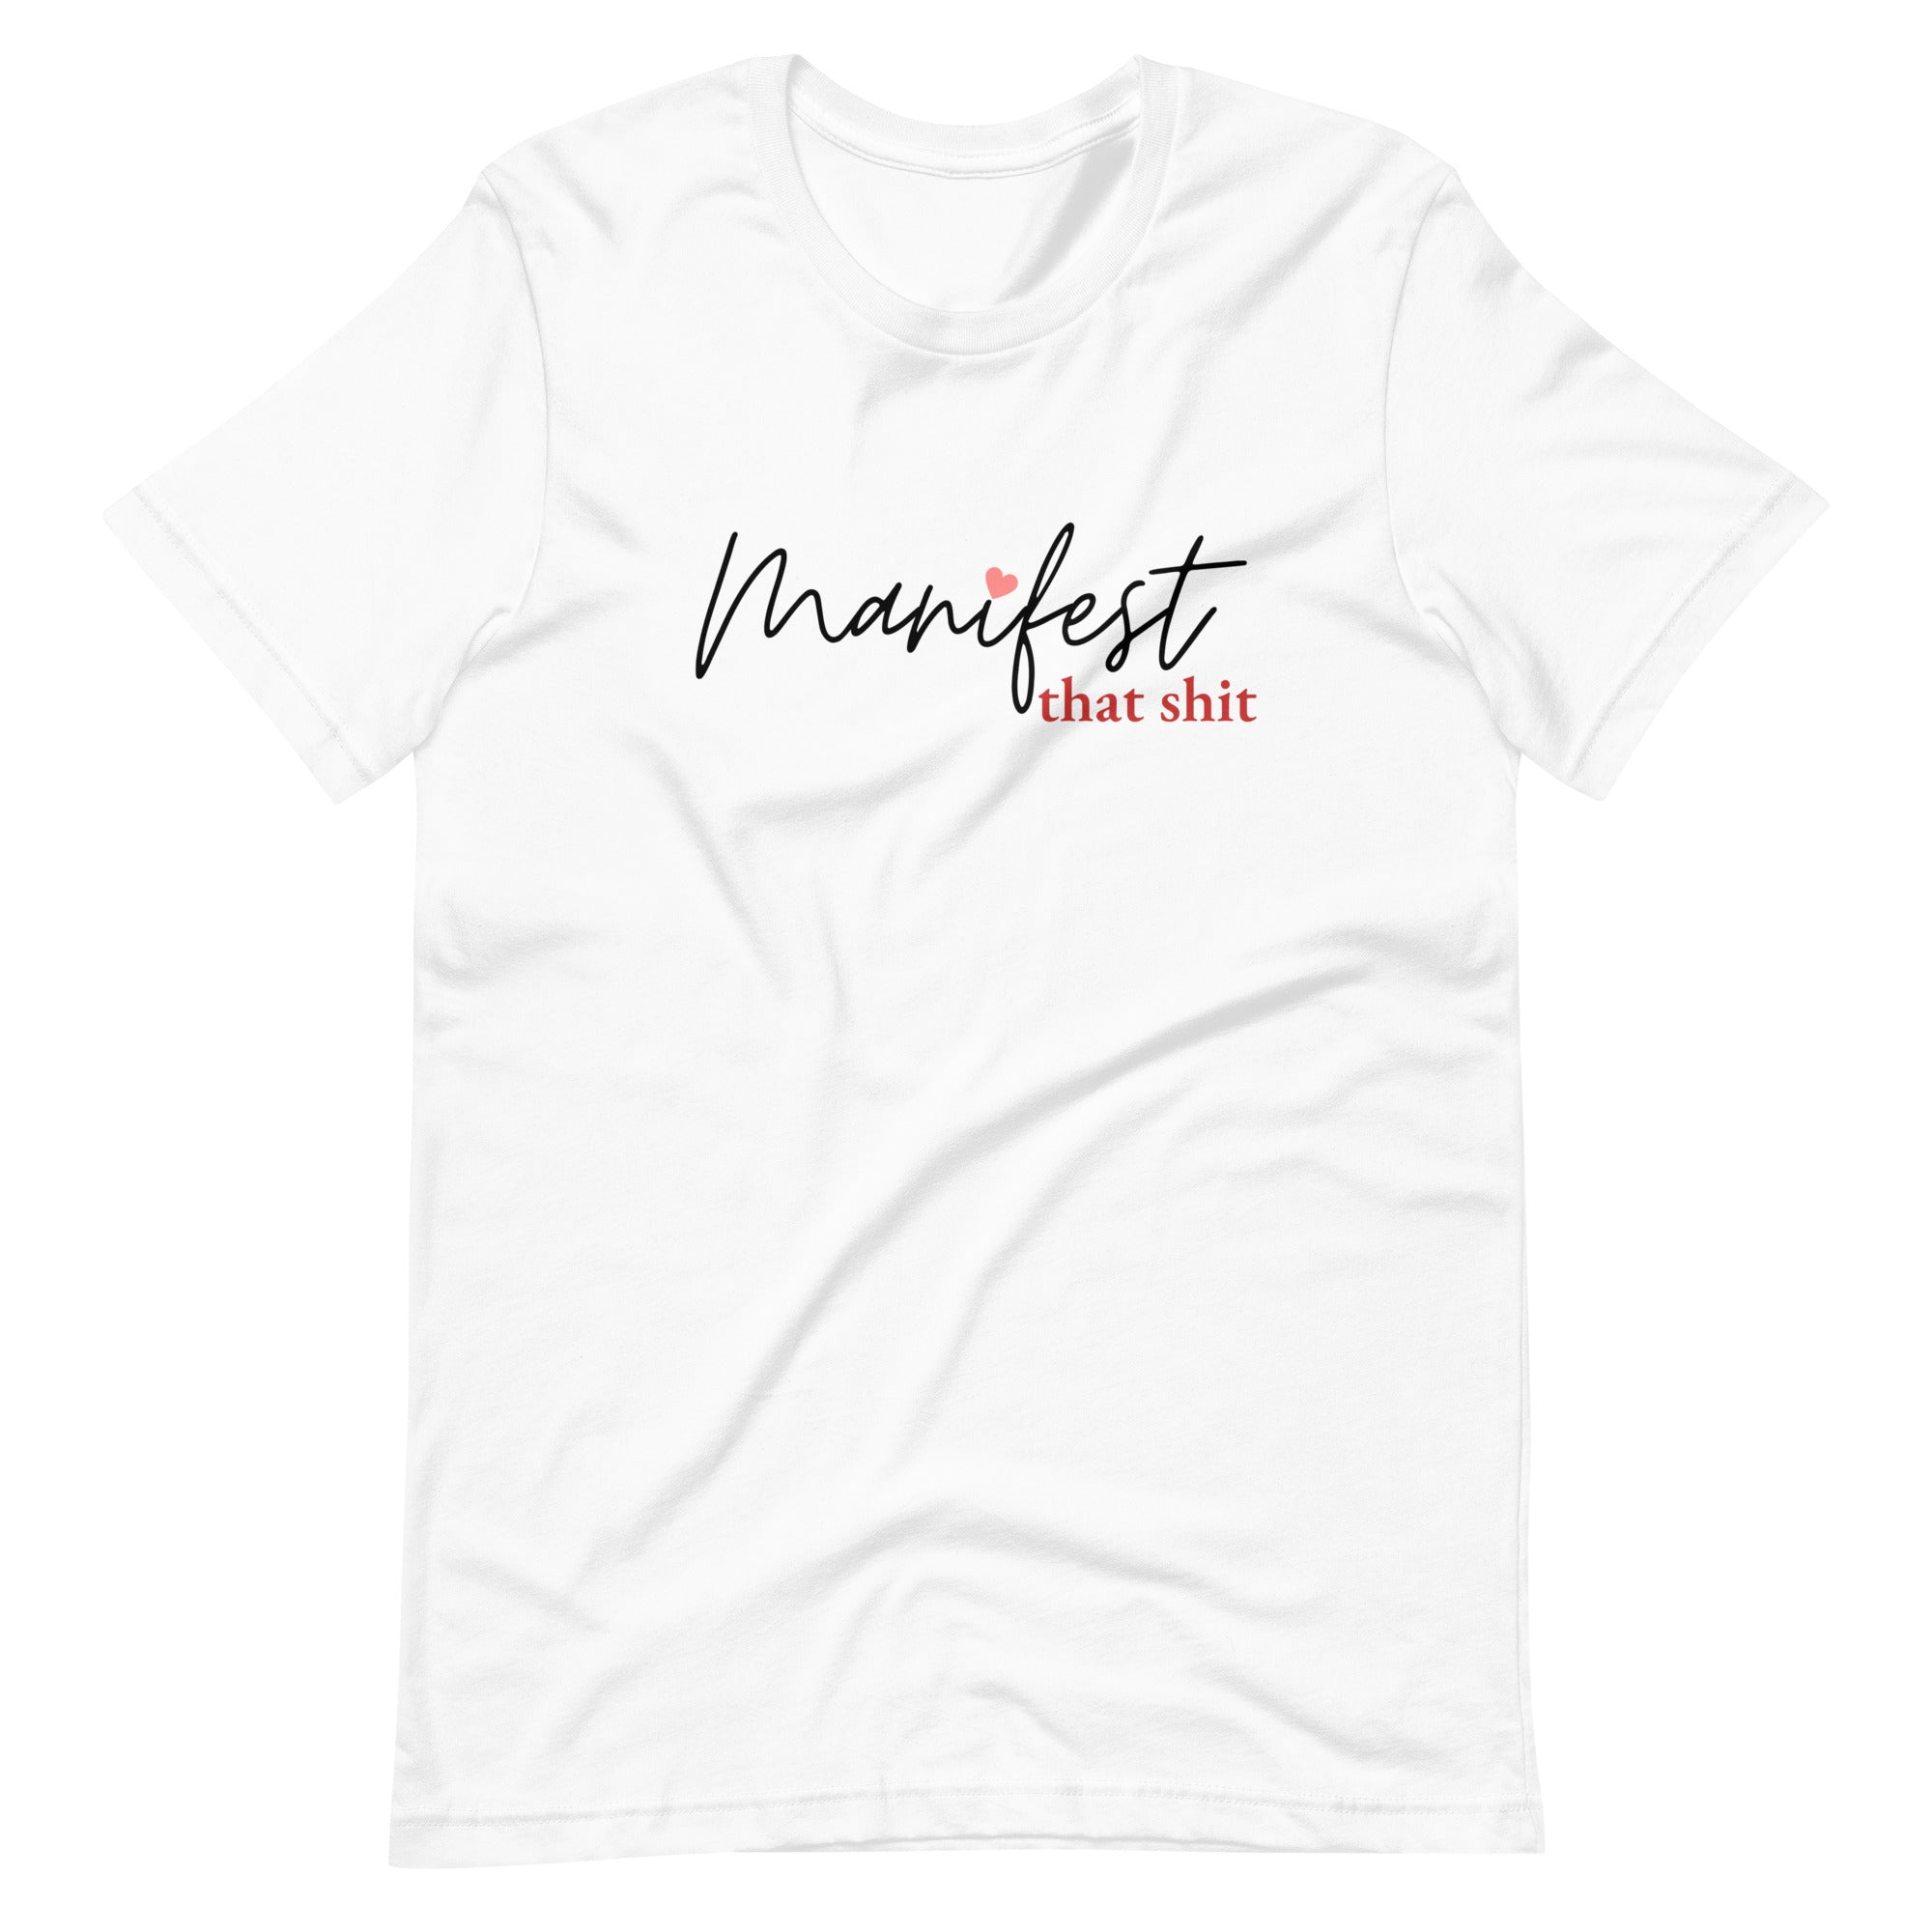 Manifest That Shit - Women's T-shirt